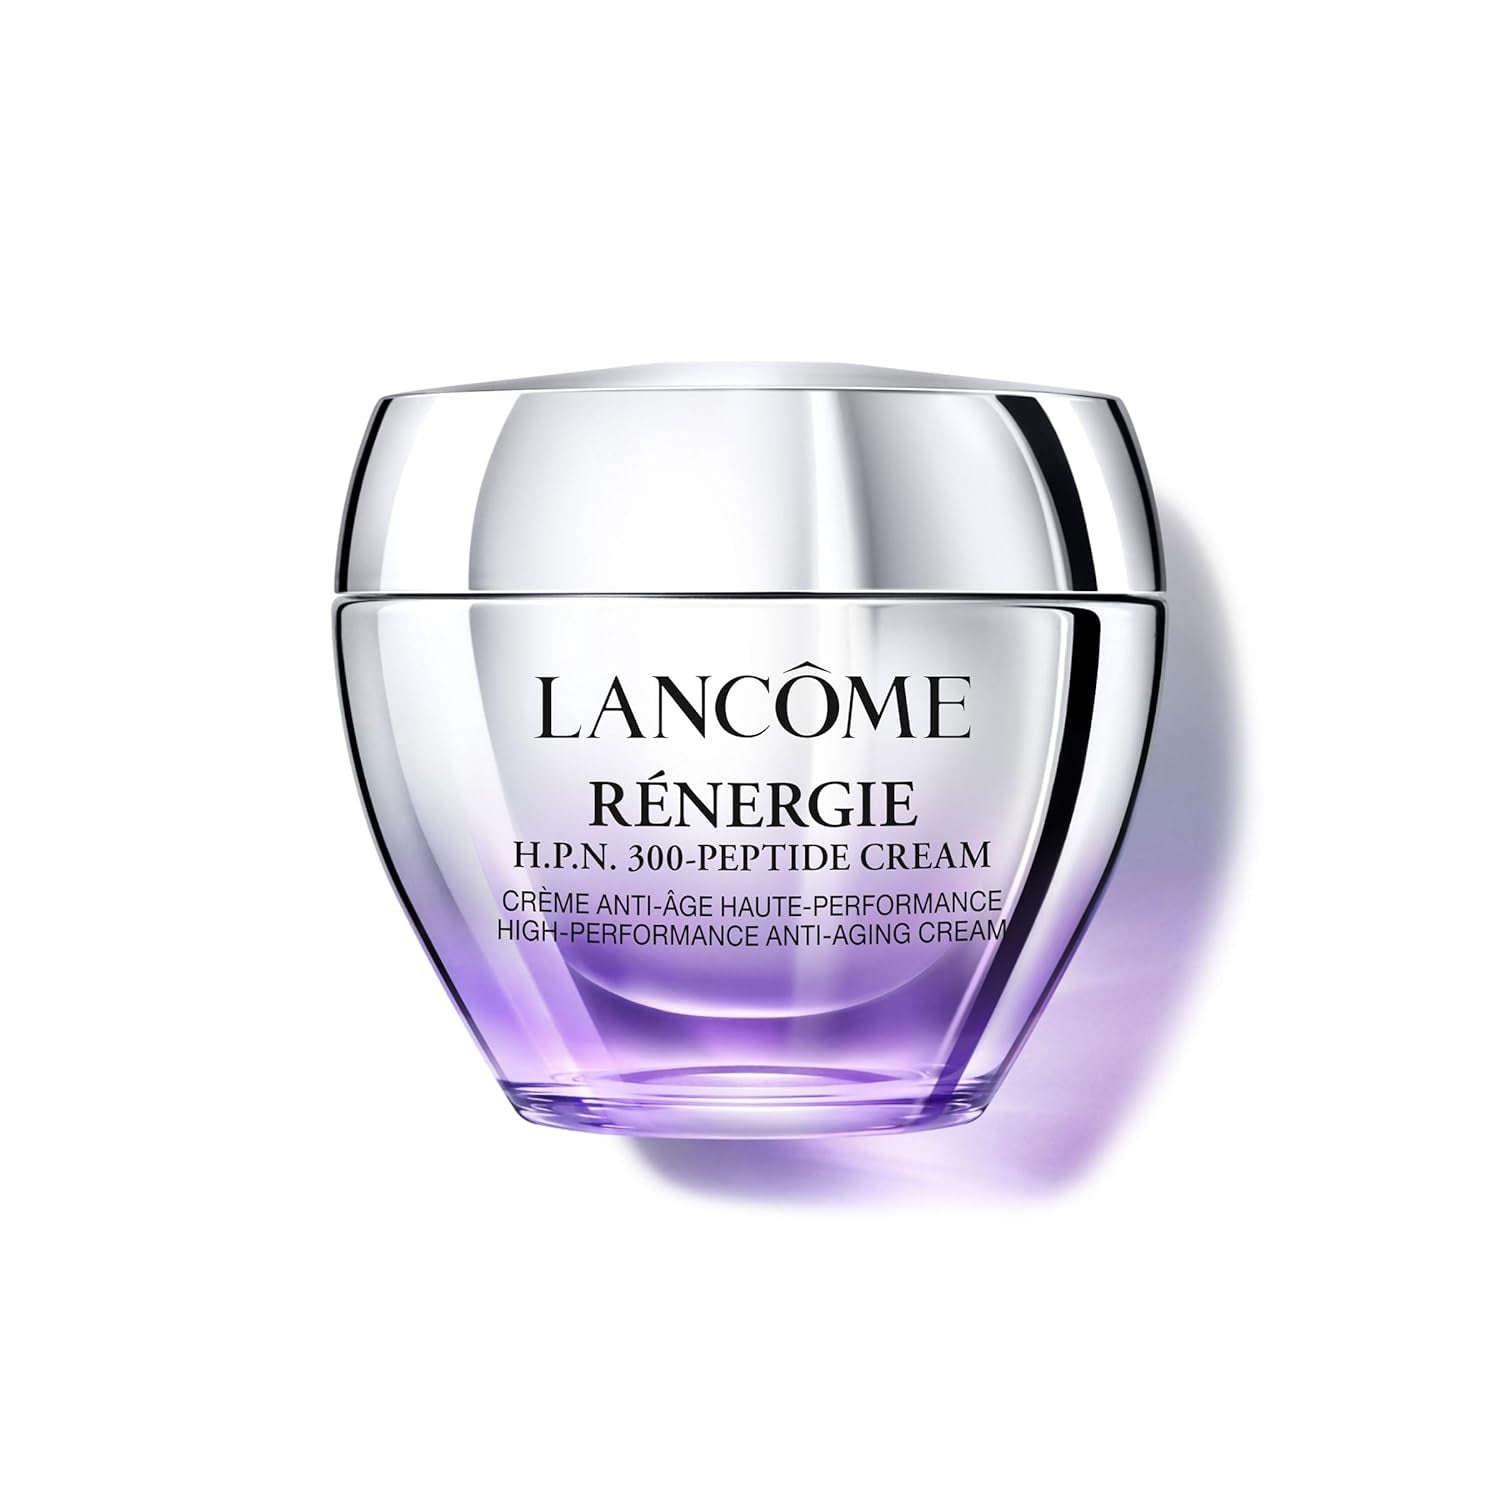 Lancôme​ Rénergie H.P.N 300-Peptide Face Cream - with Hyaluronic Acid & Niacinamide - Helps Visibly Reduce Lower Face Sagging, Wrinkles, & Dark Spots